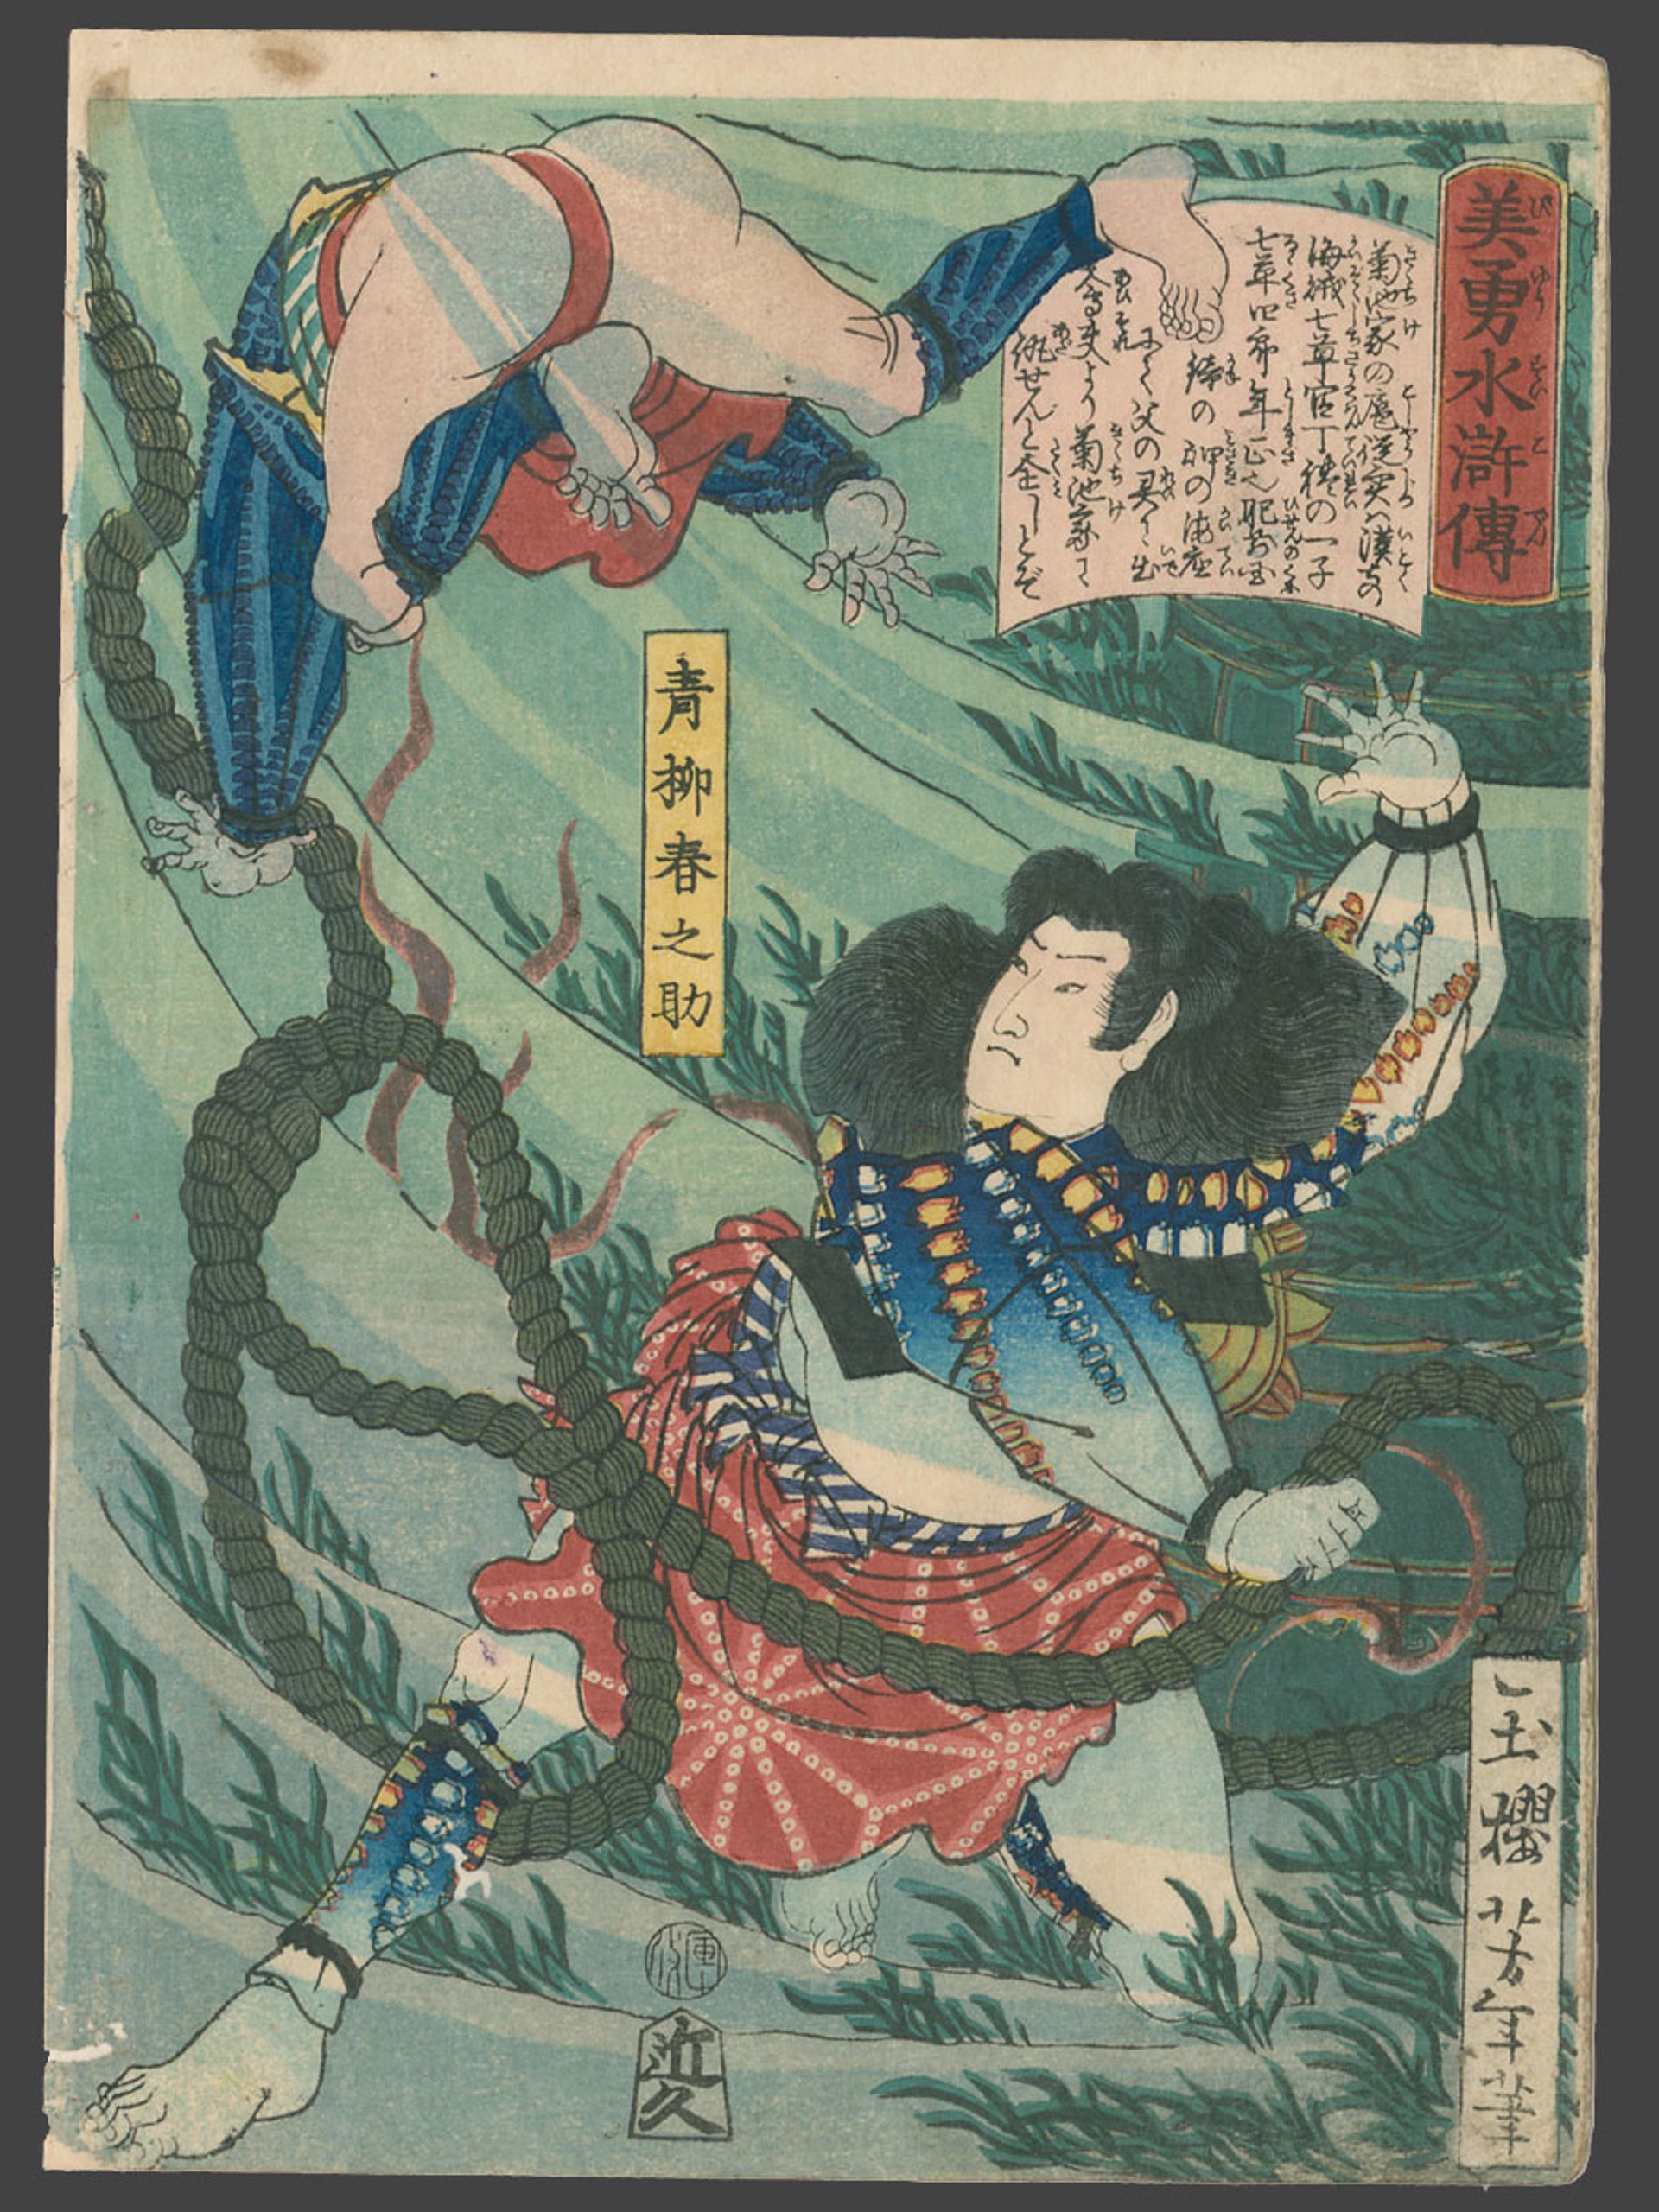 Aoyagi Harunosuke Biyu Suikoden (Beauty and Valor in Tales of the Water Margin) by Yoshitoshi